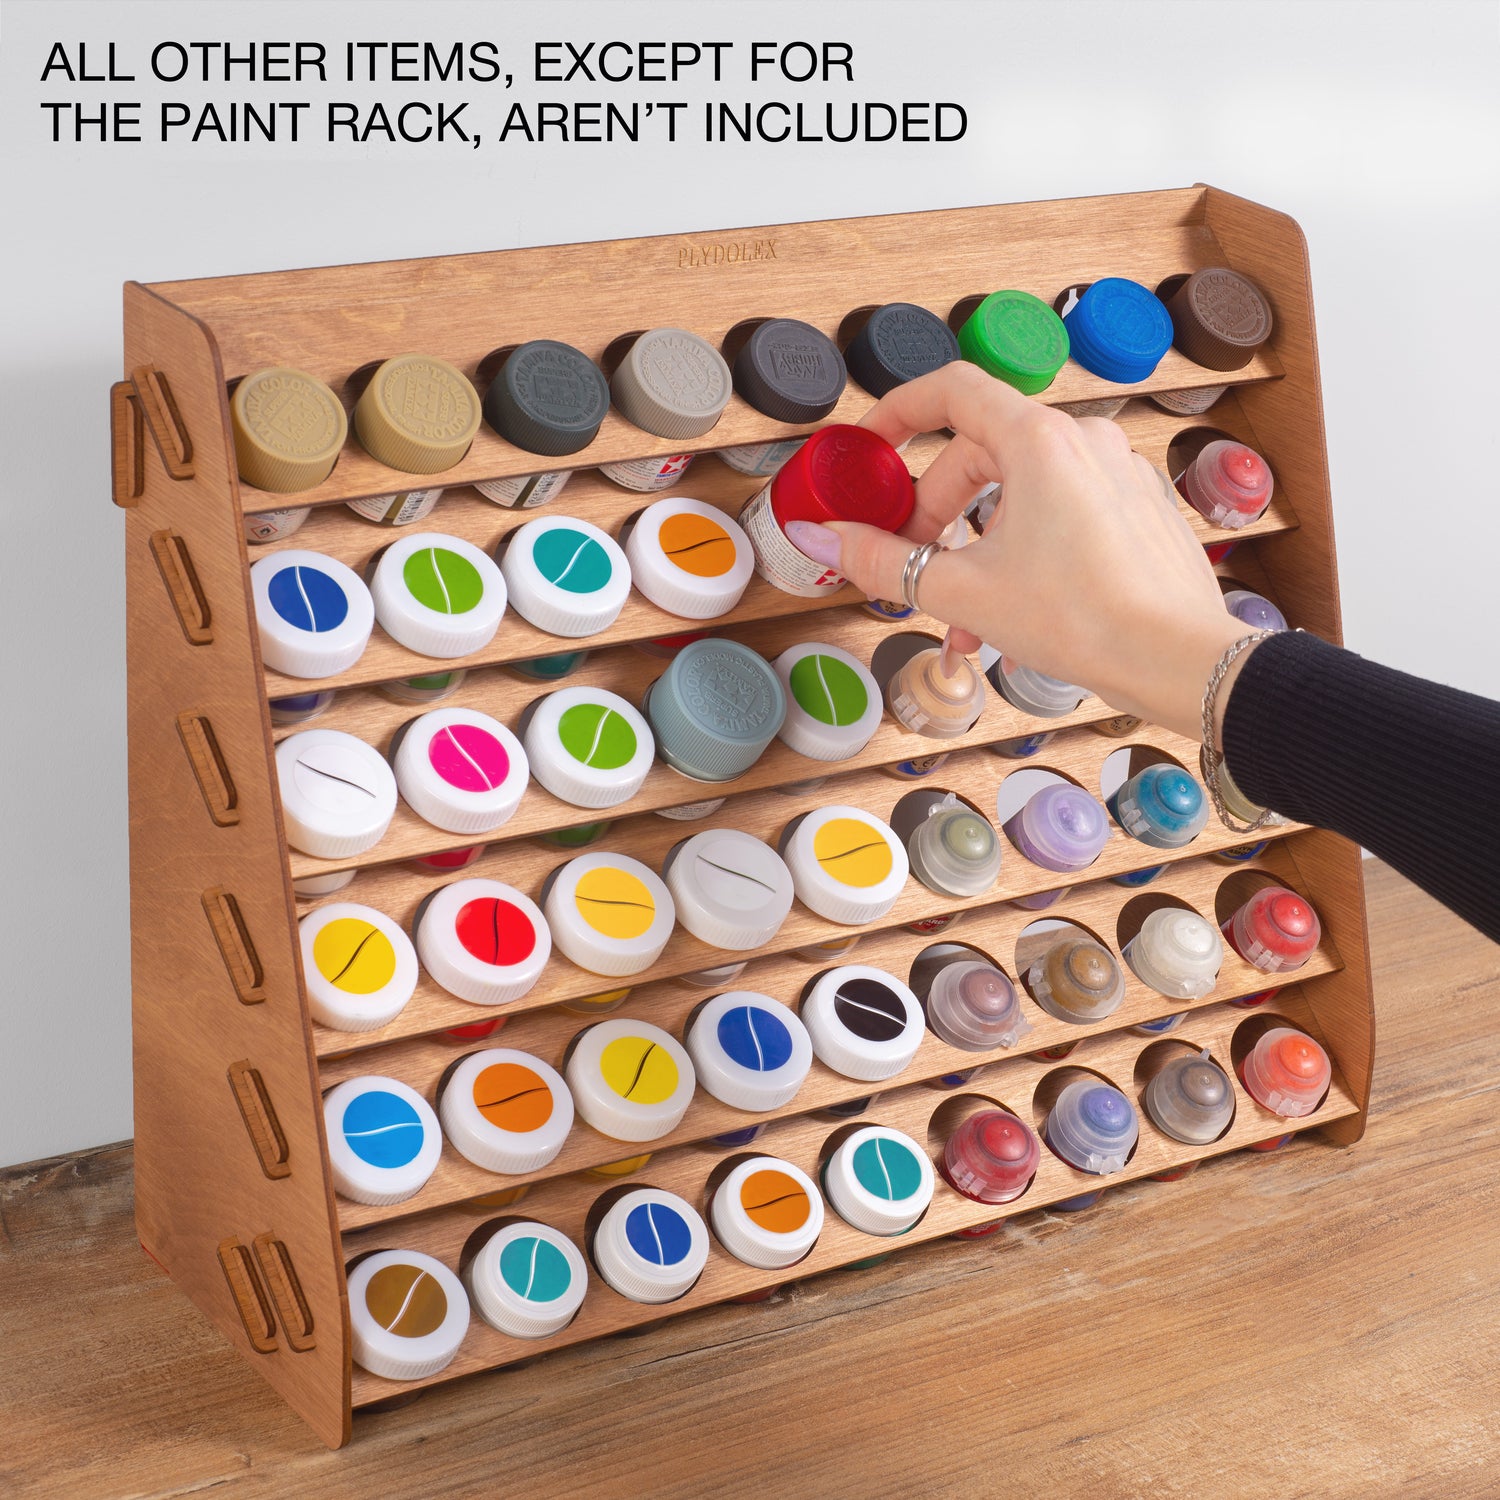 Vallejo Paint Rack Organizer With 72 Holes for Miniature Paint Set